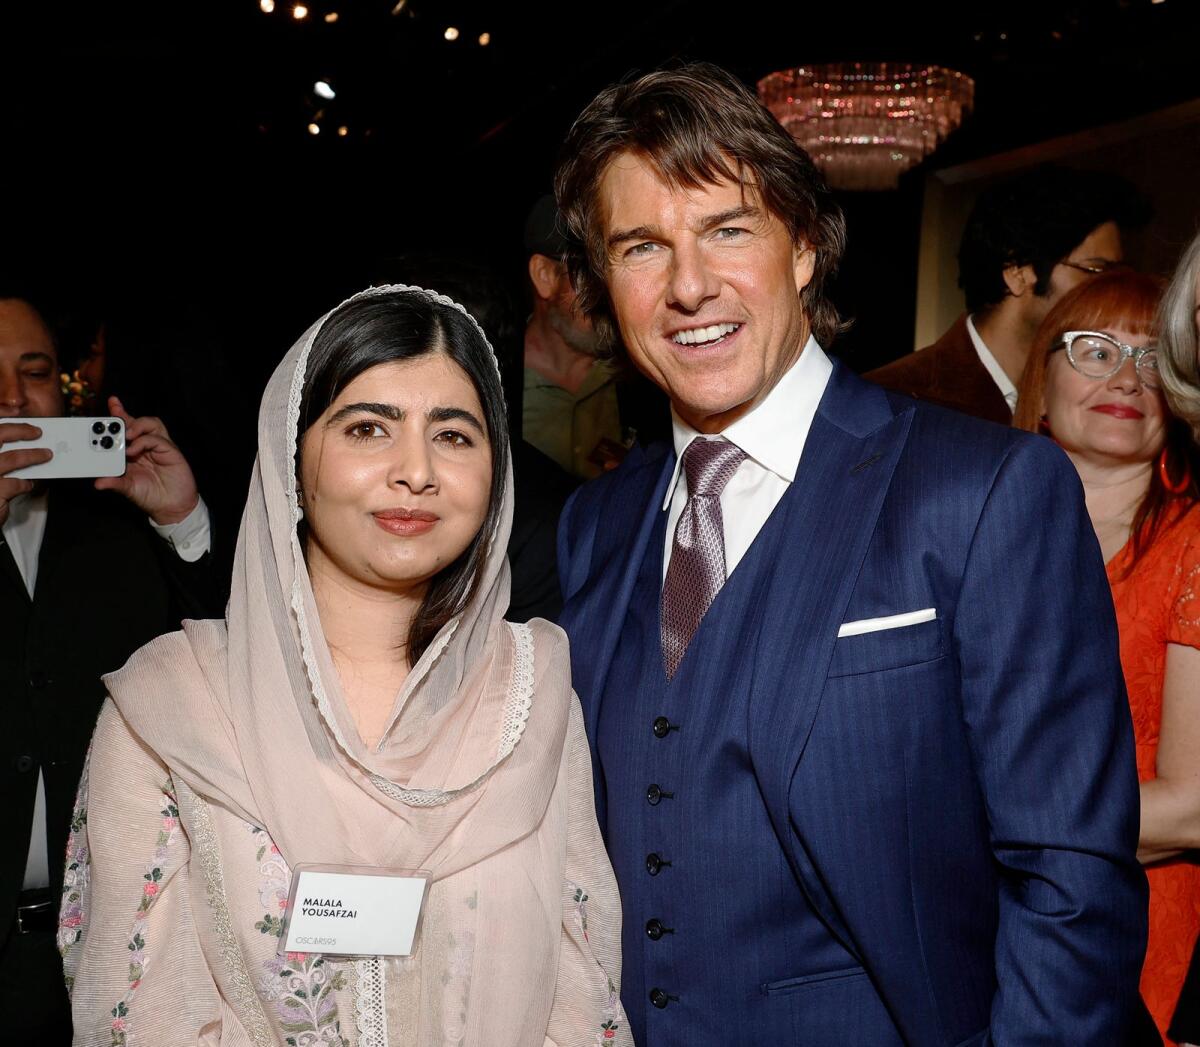 Pakistani activist Malala Yousafzai pictured with Tom Cruise